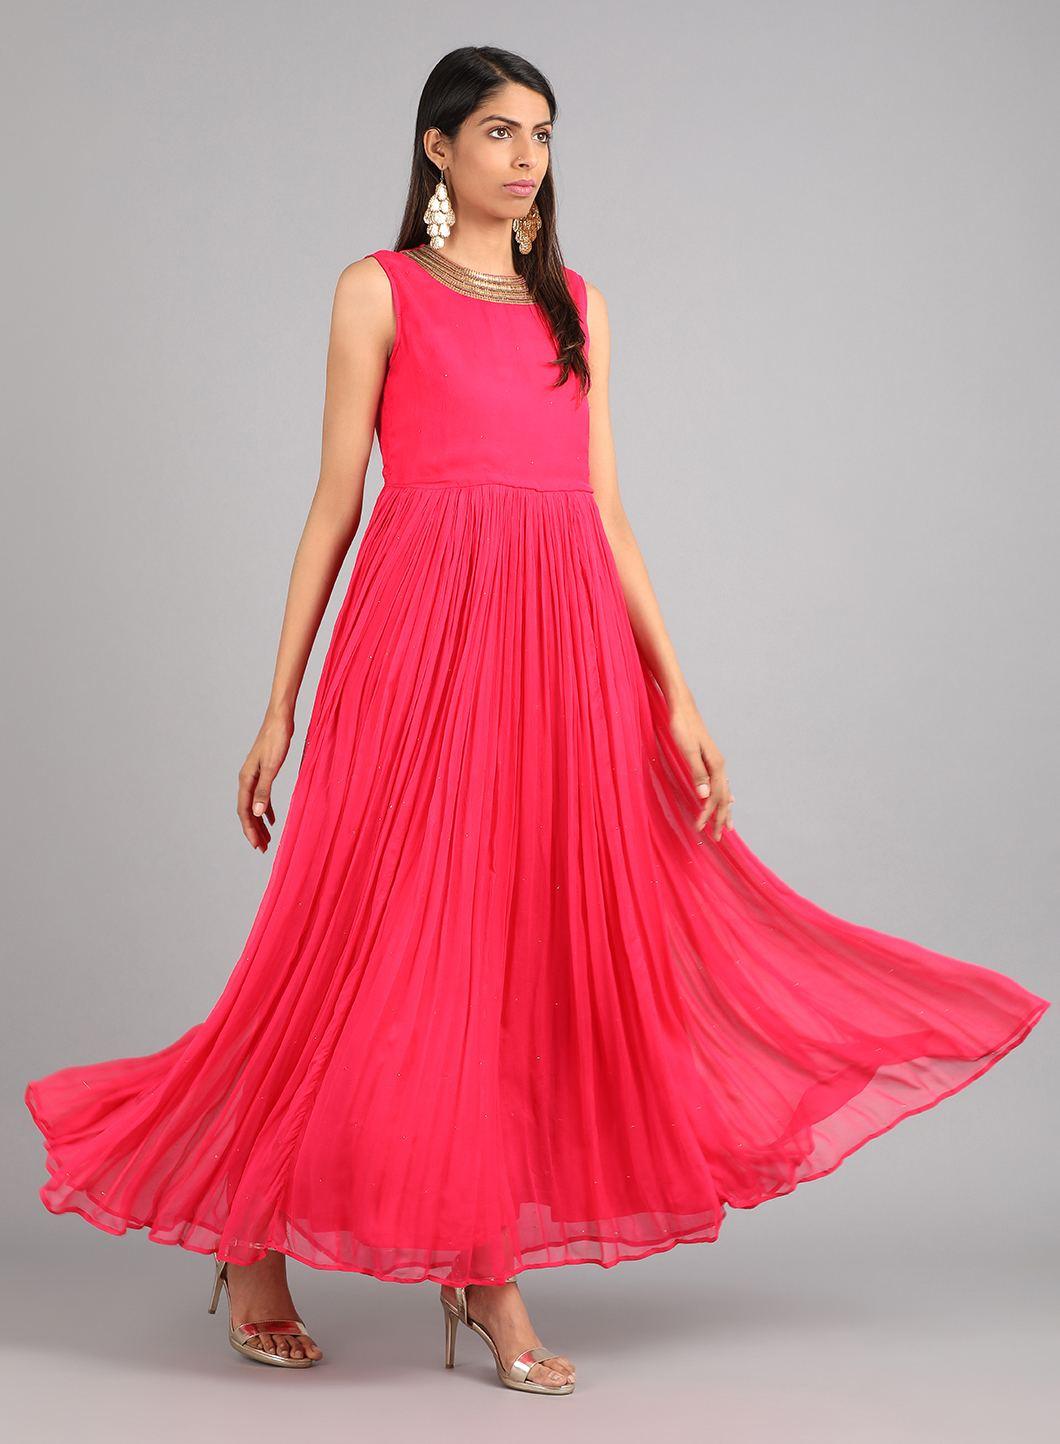 Pink Round Neck Solid kurta Dress - wforwoman